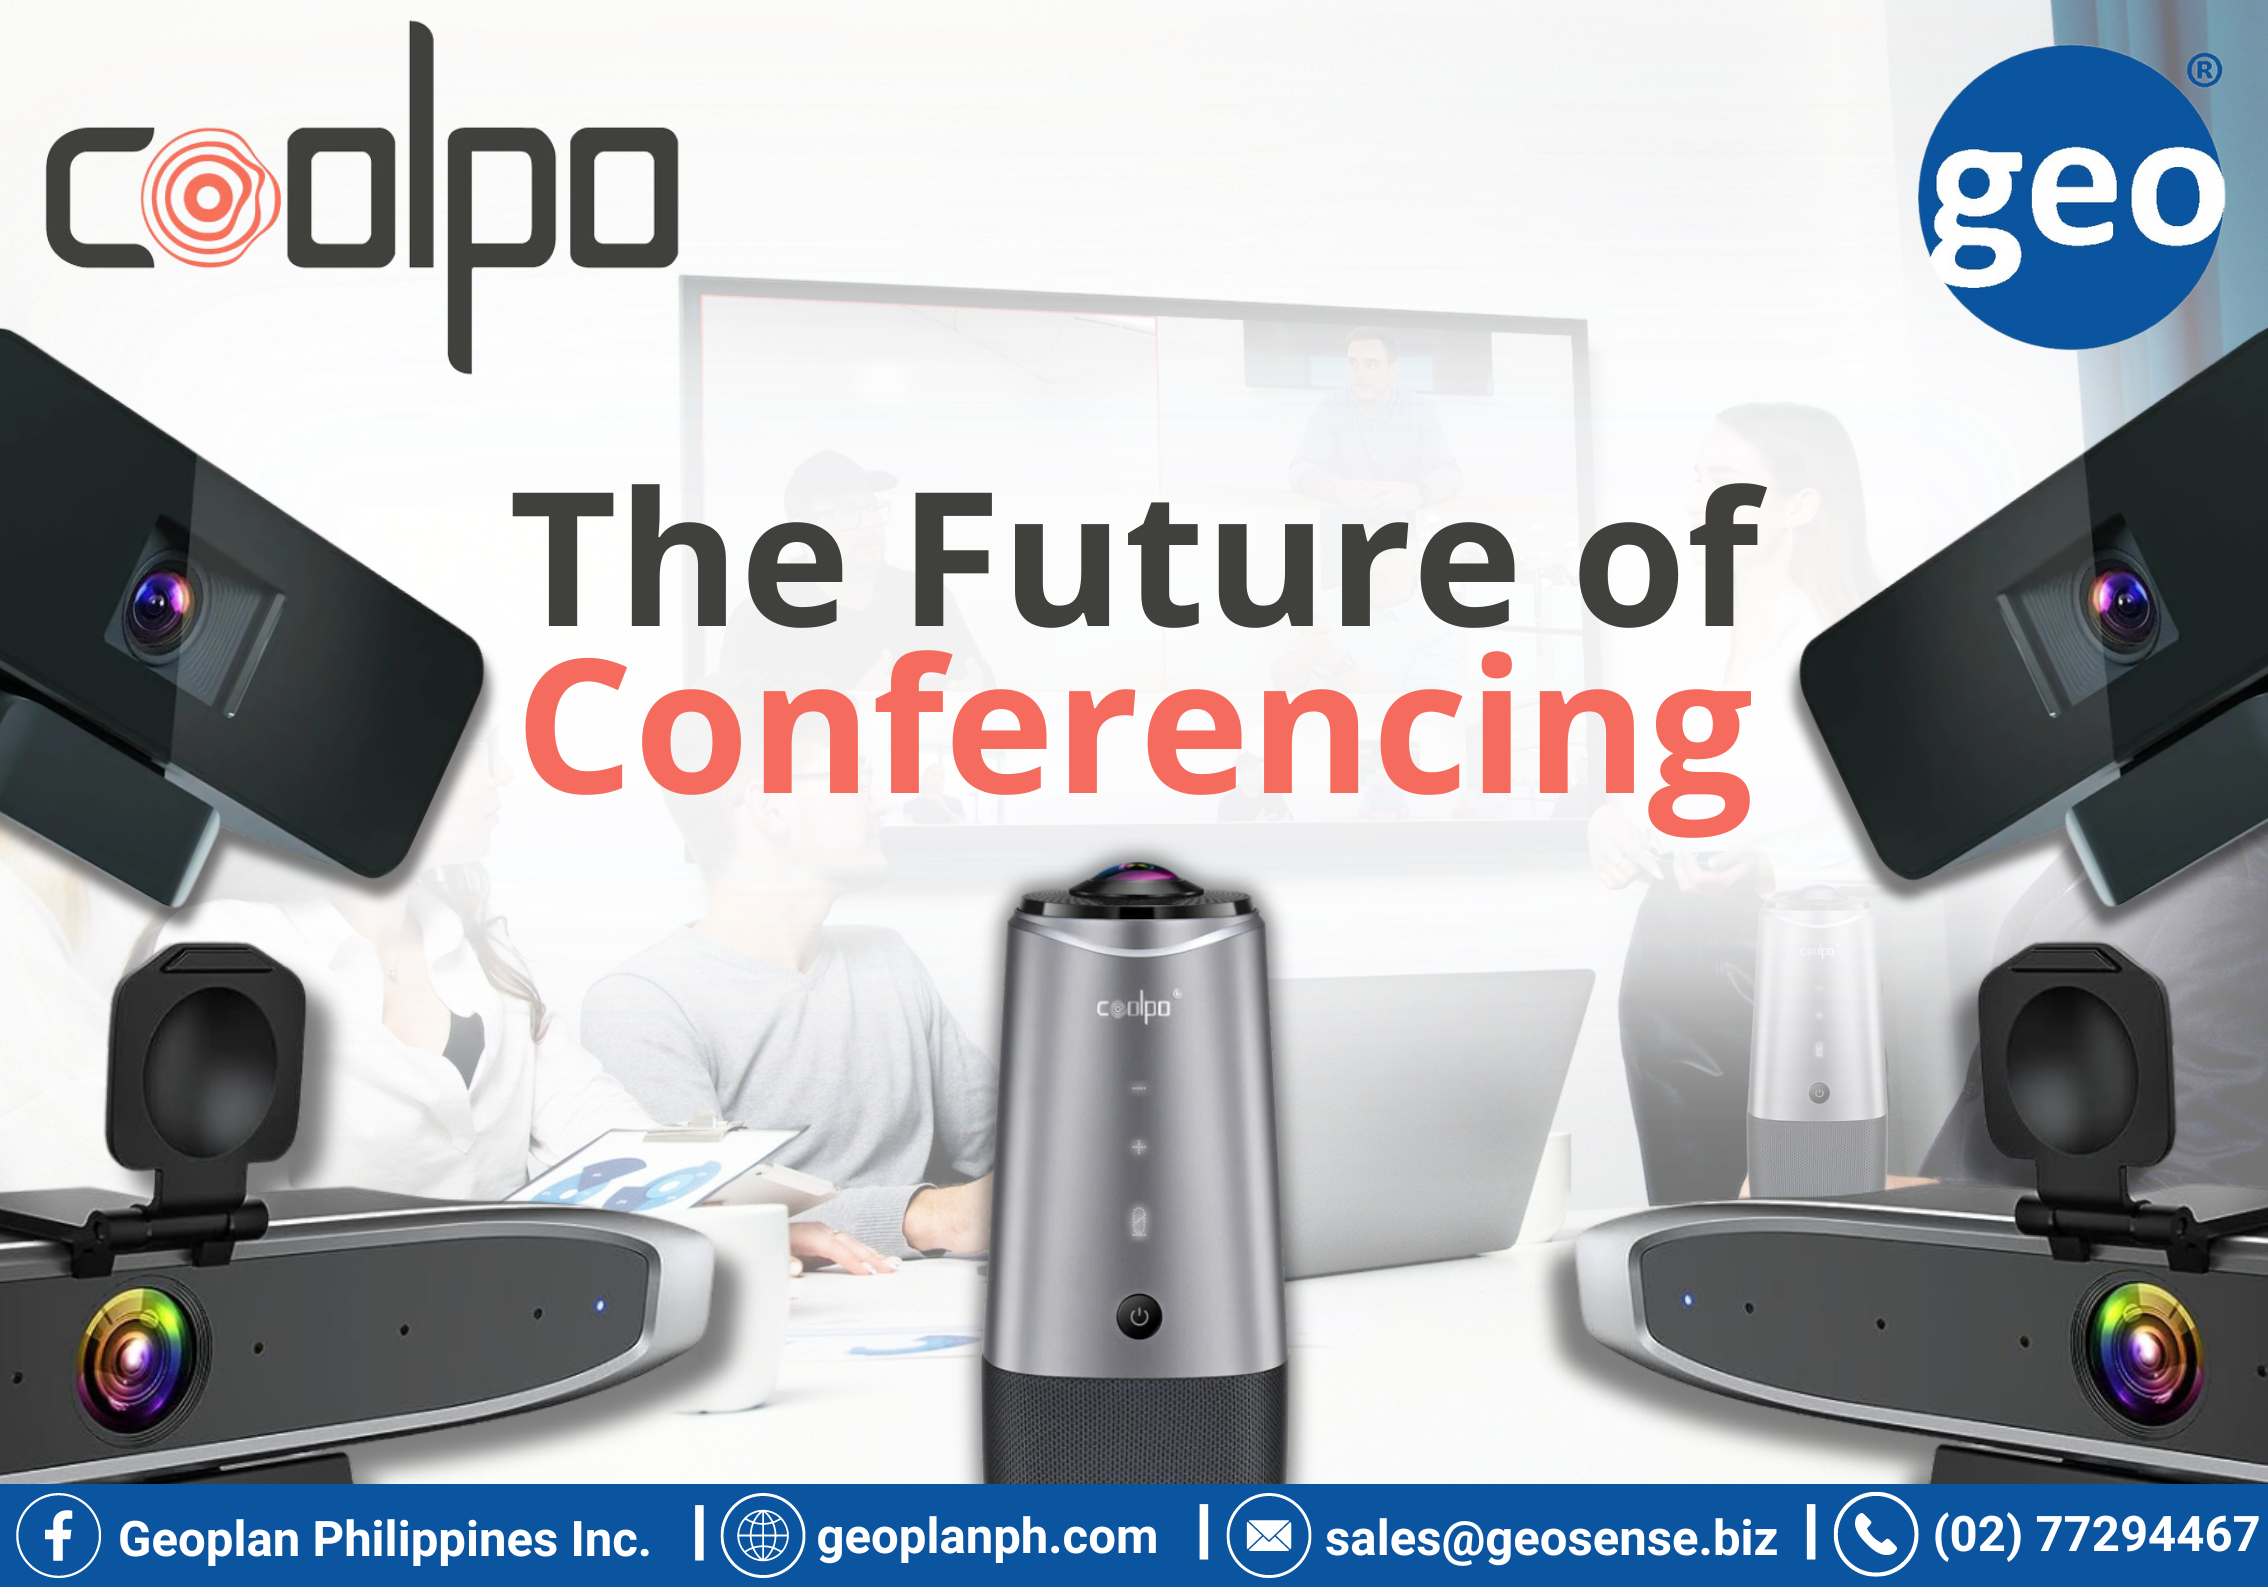 Coolpo:  The Bright Future of Video Conferencing